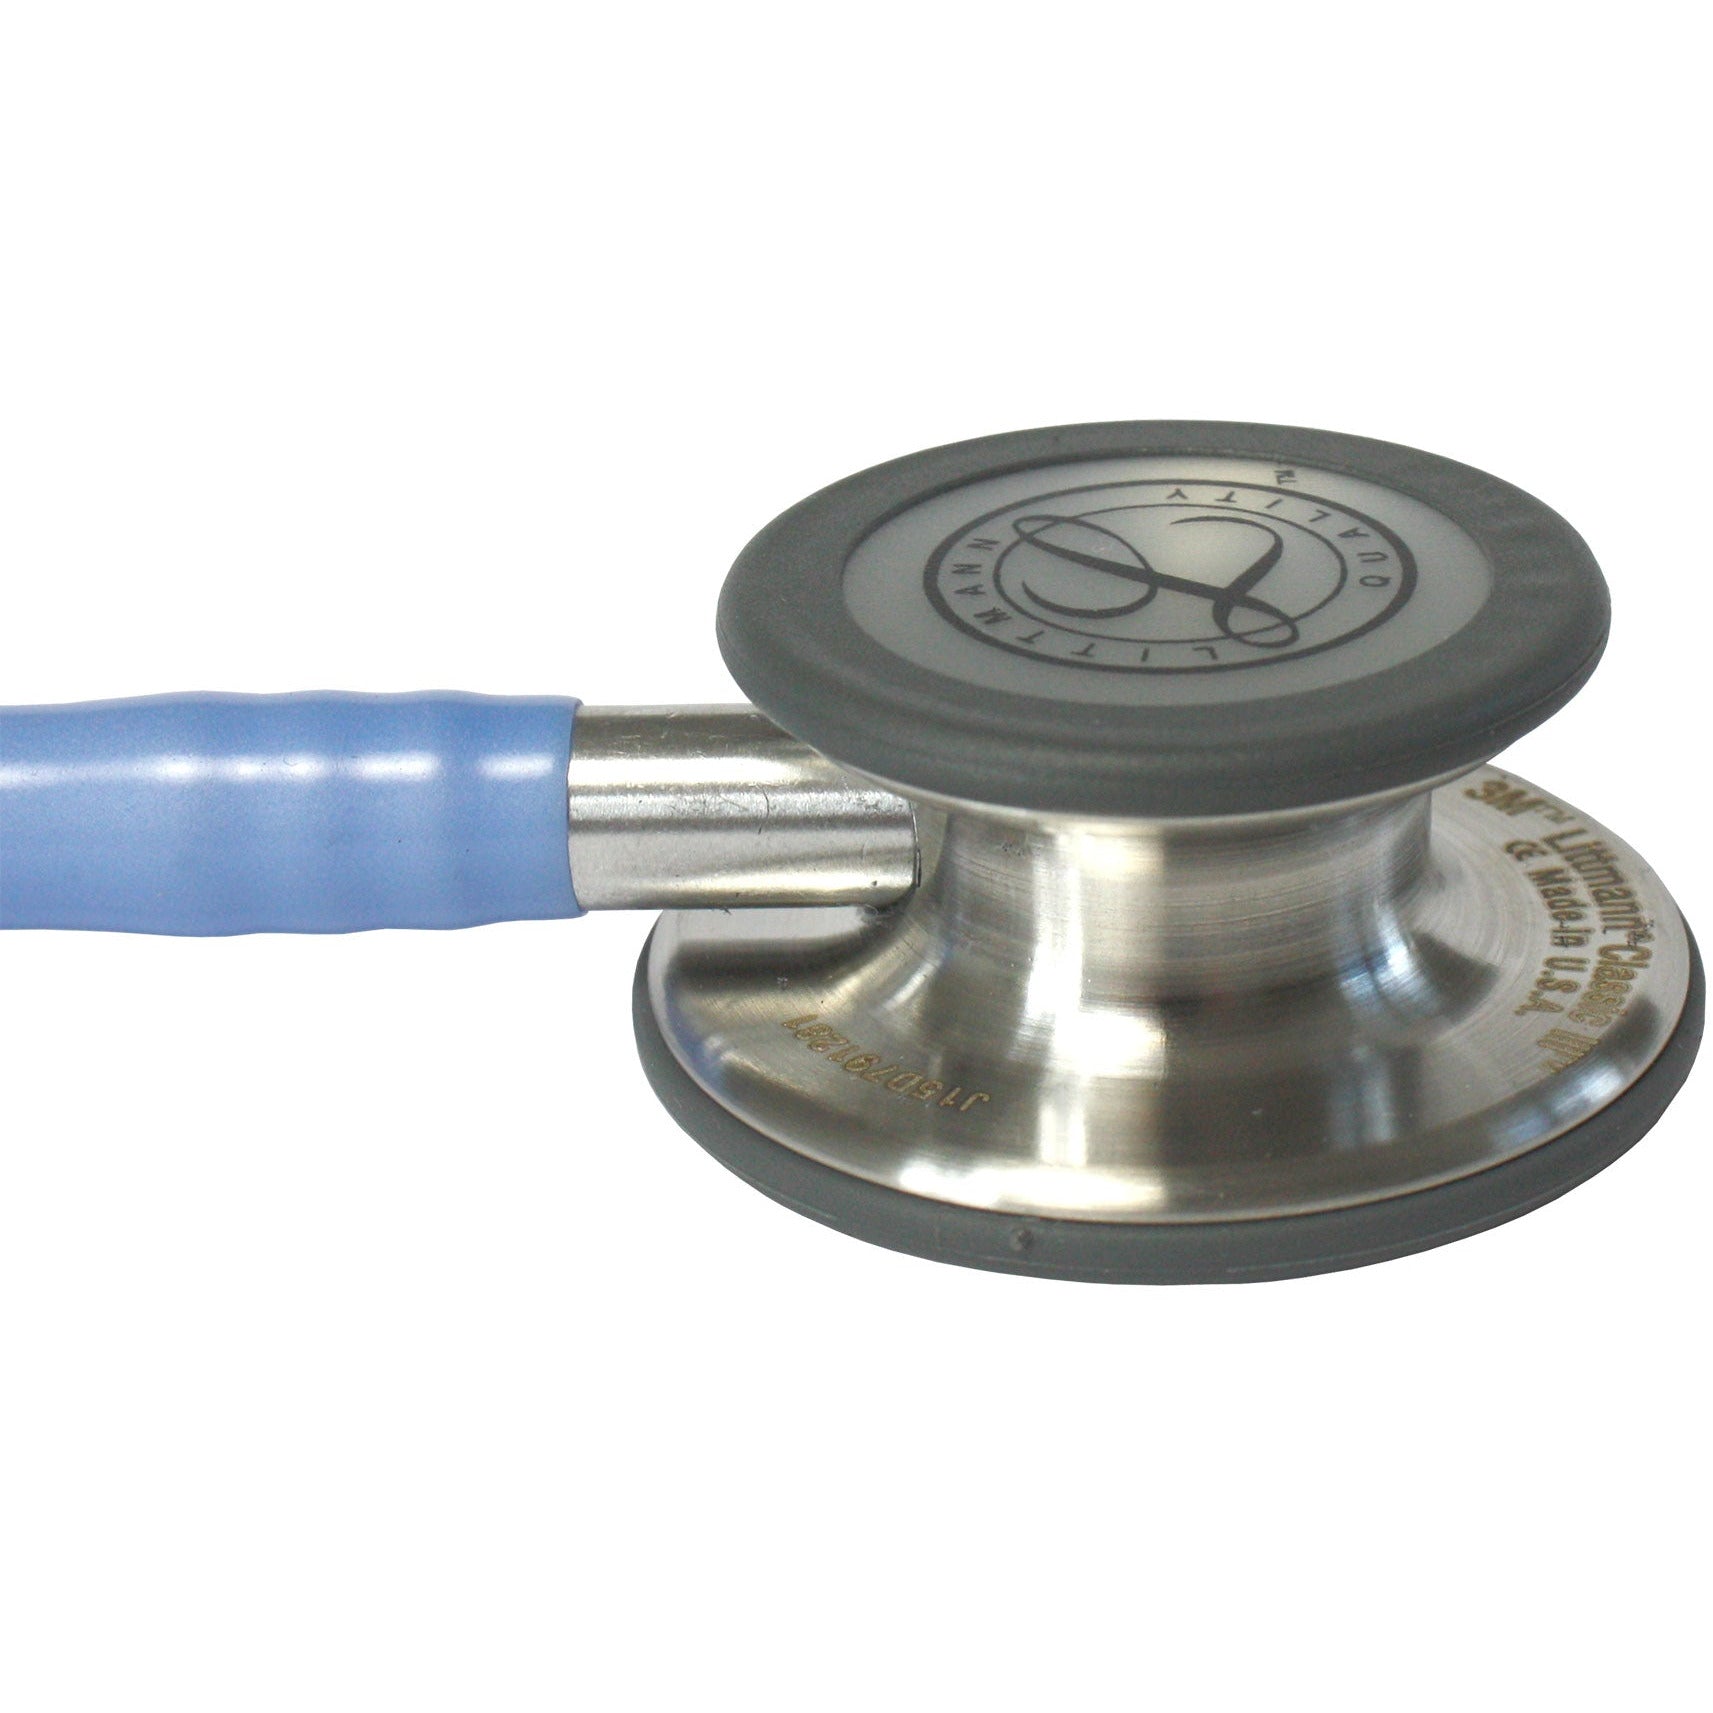 Littmann Classic III Stethoscope: Ceil Blue 5630 3M Littmann